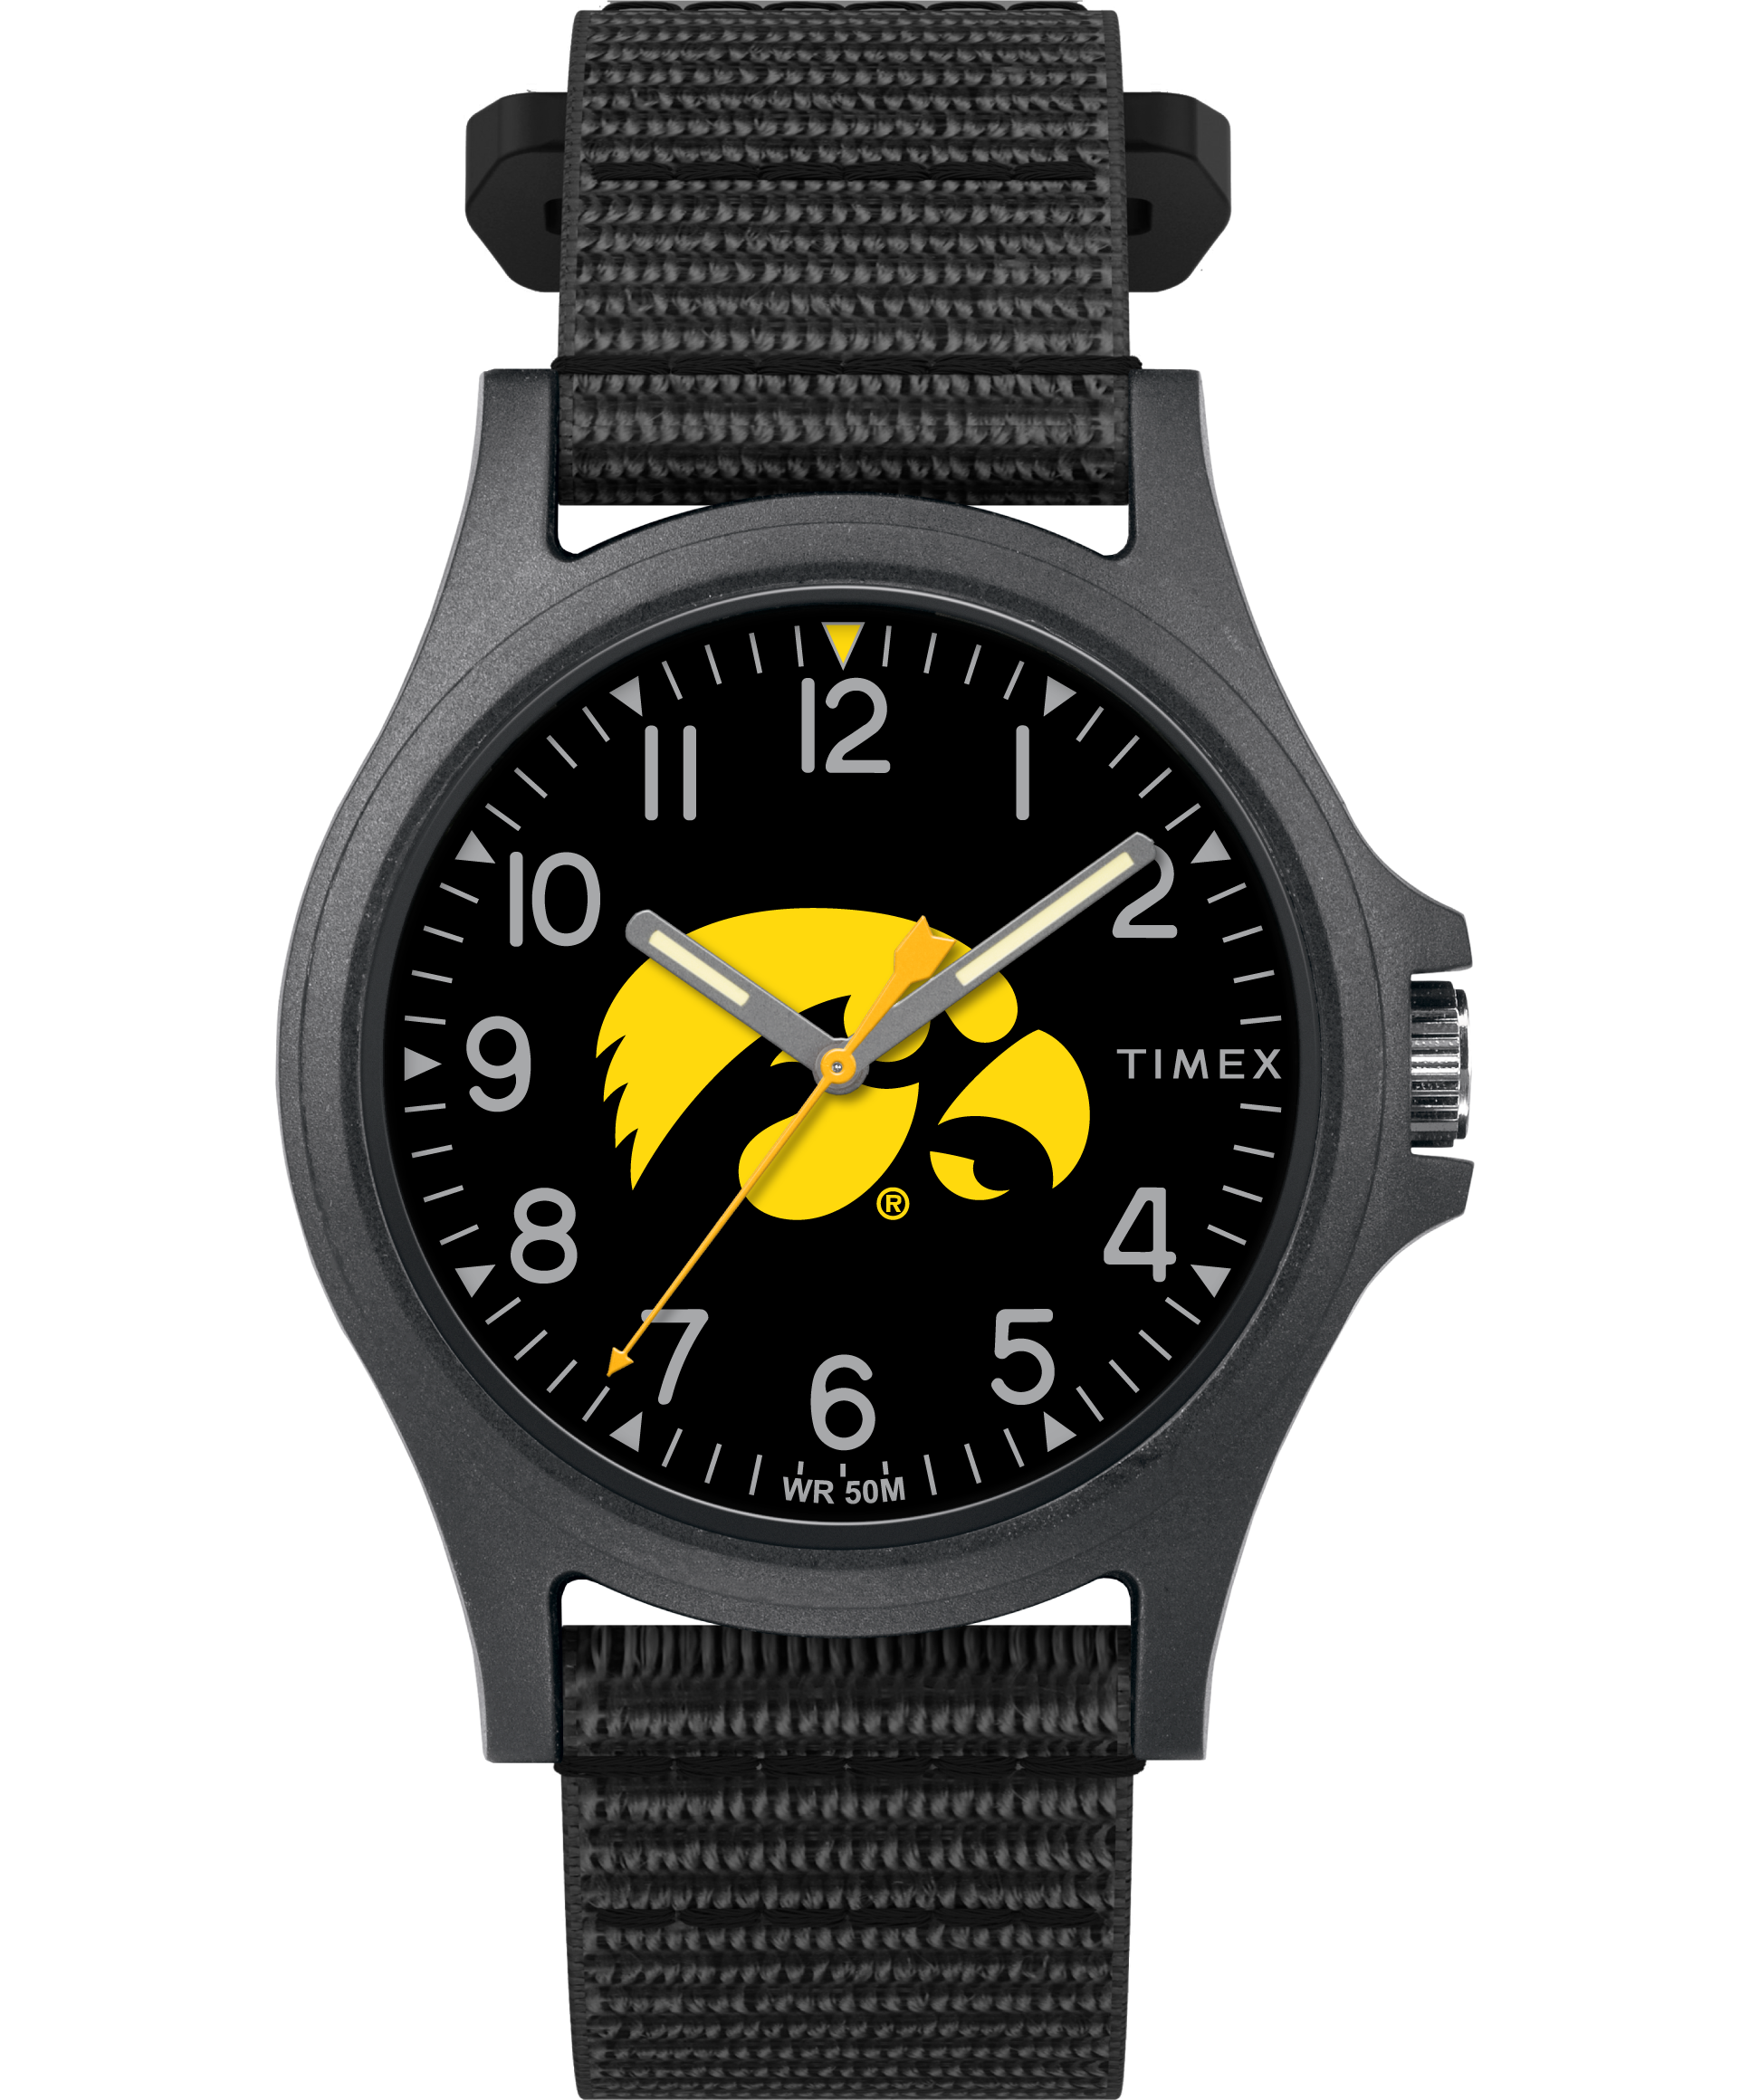 Hawkeye: Rolex Watch Theories Explained | Den of Geek